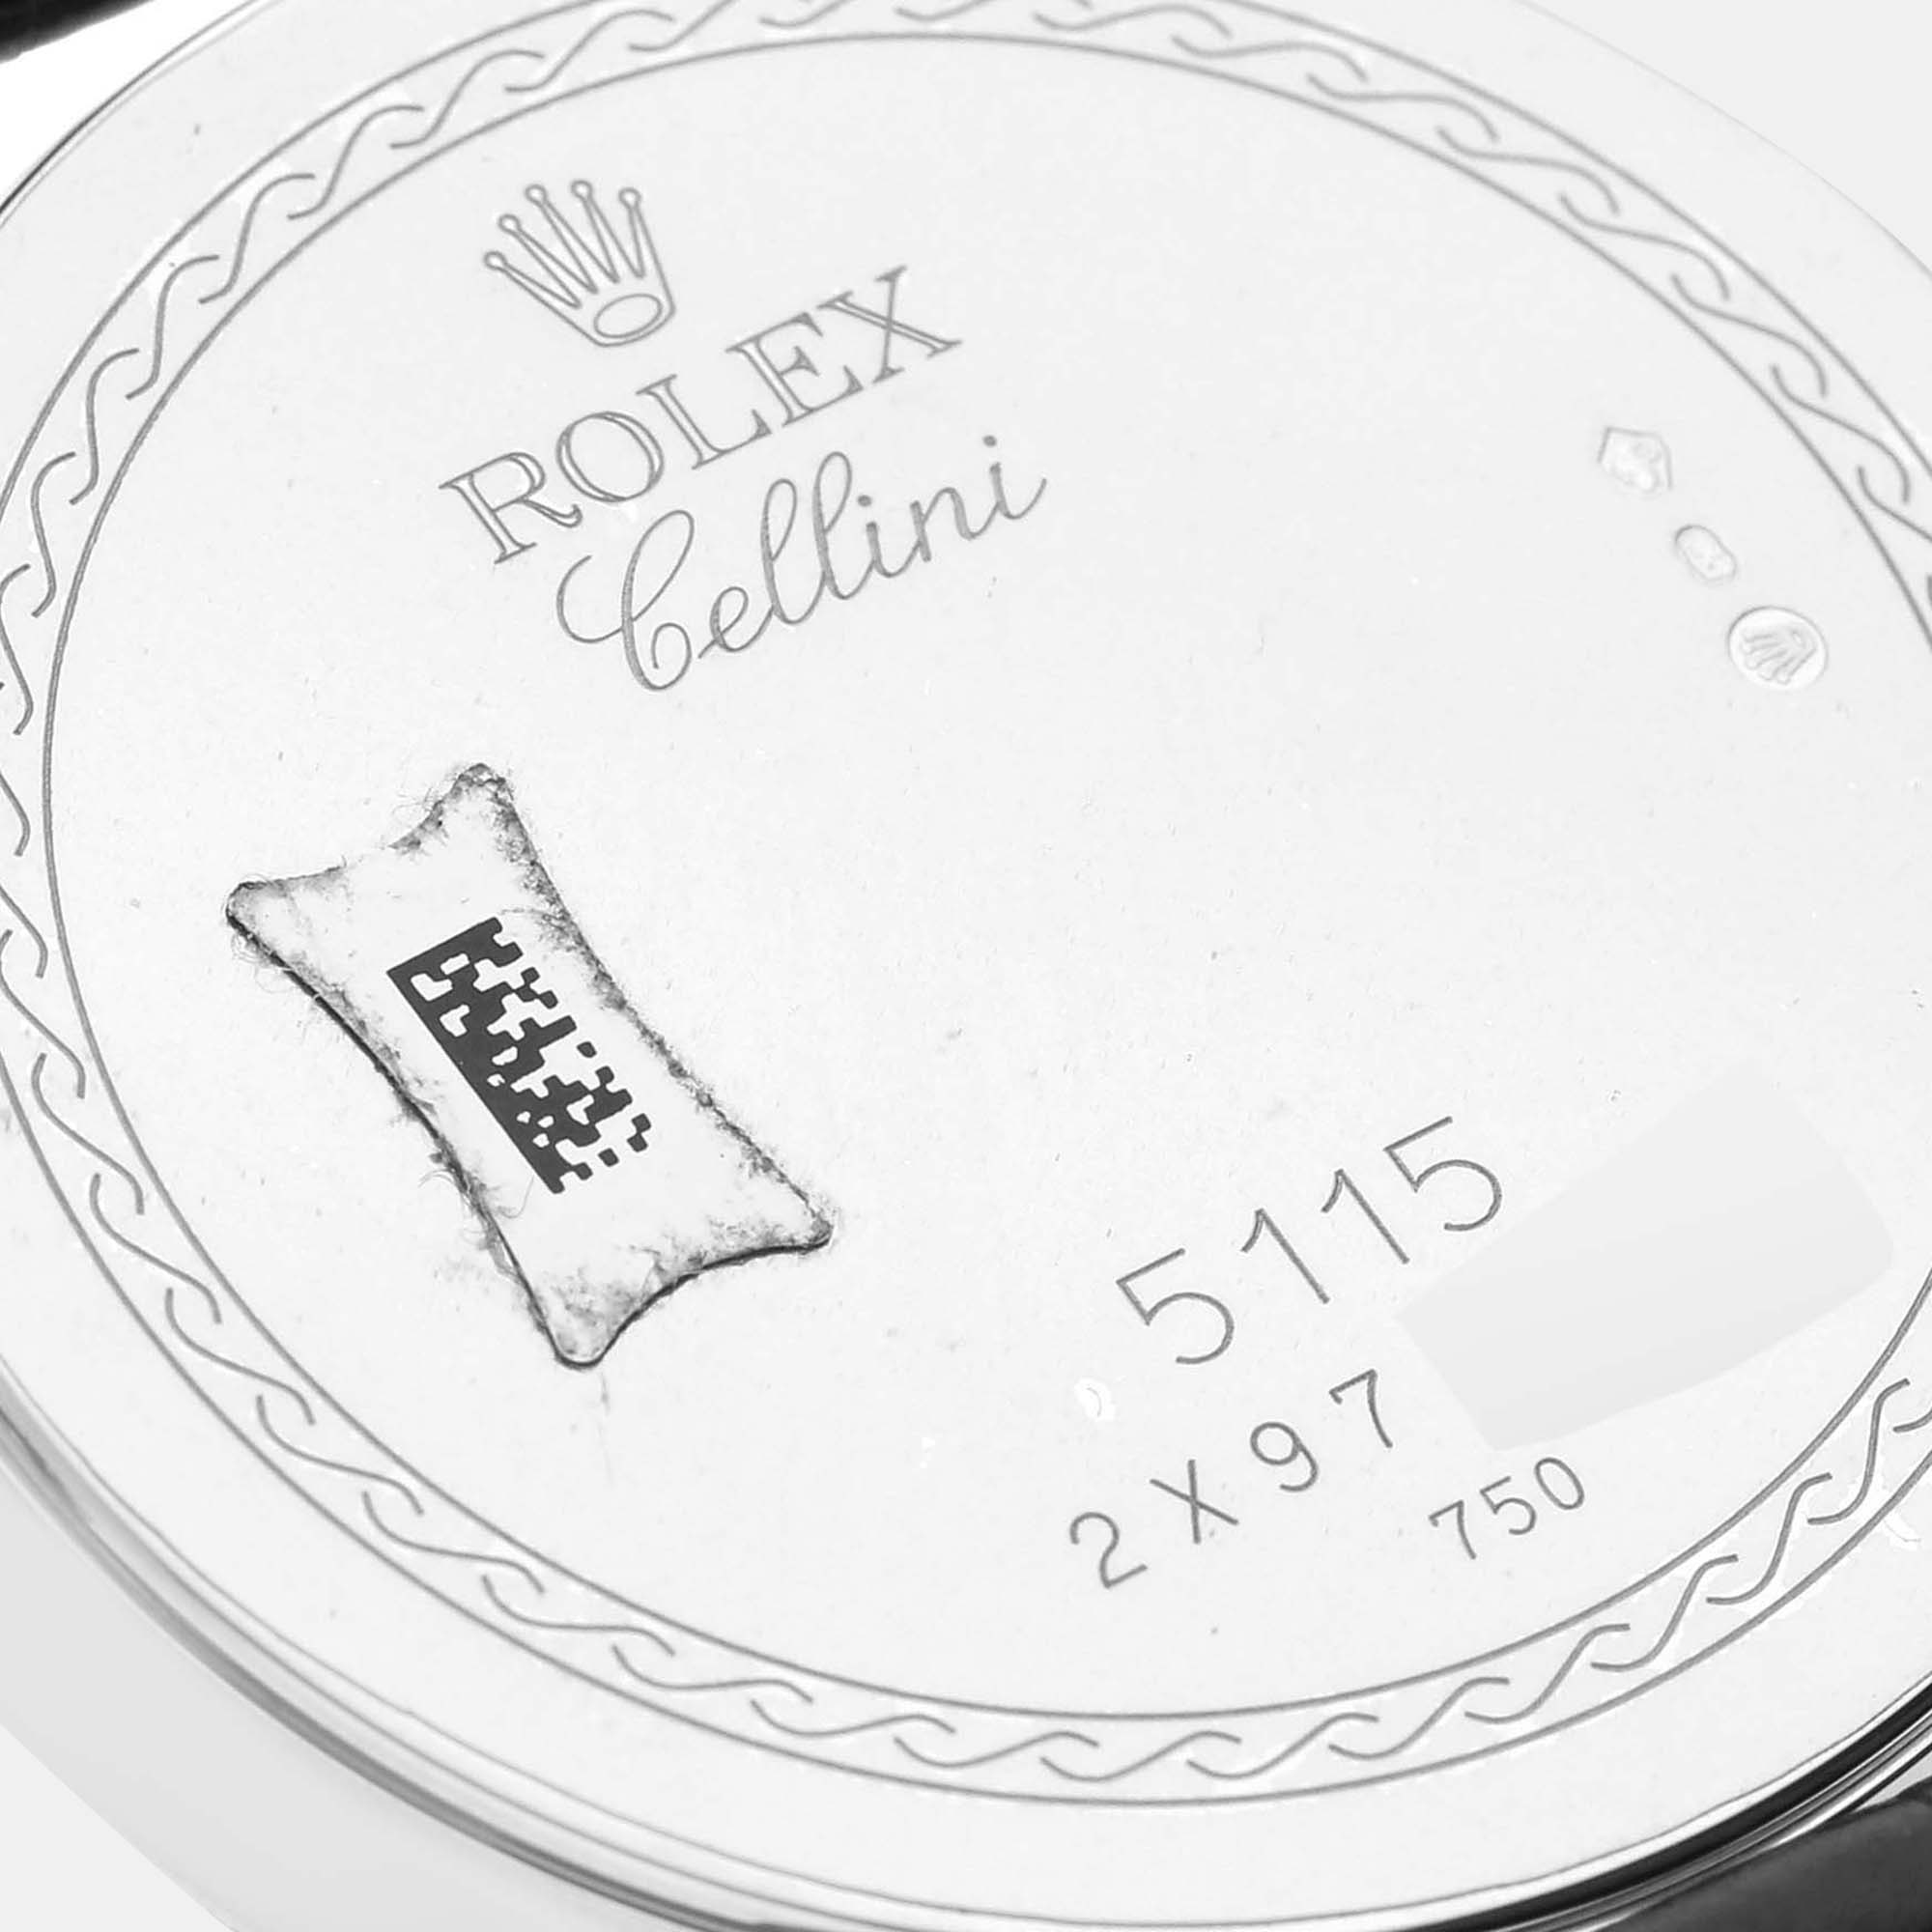 Rolex Cellini Classic White Gold Silver Dial Men's Watch 5115 31.8 X 5.5 Mm